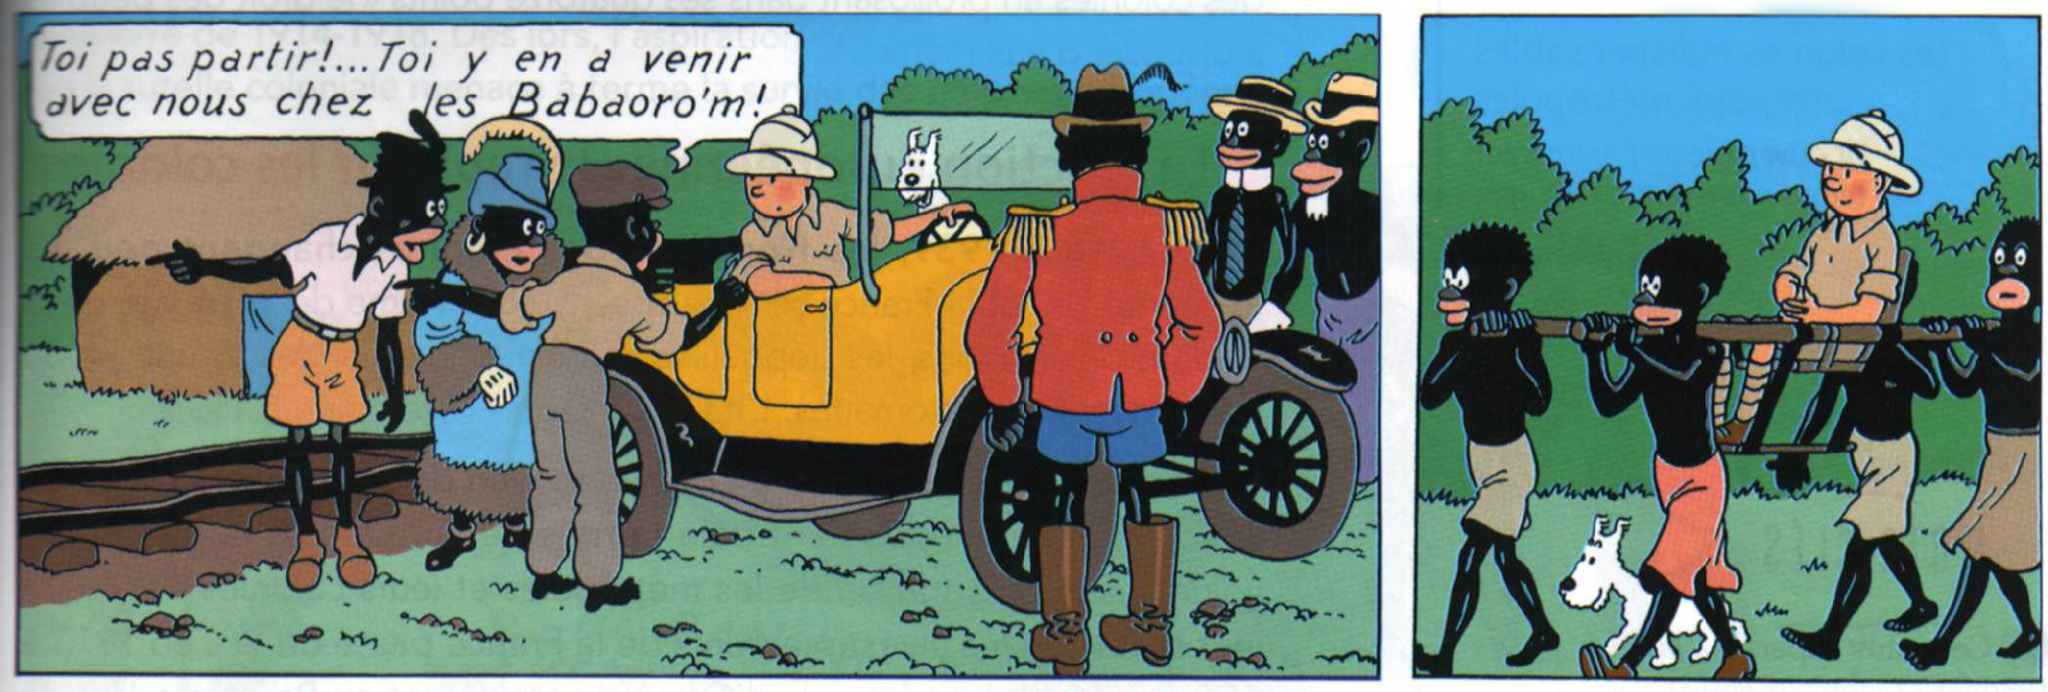 Tintin au Congo. Dodgy